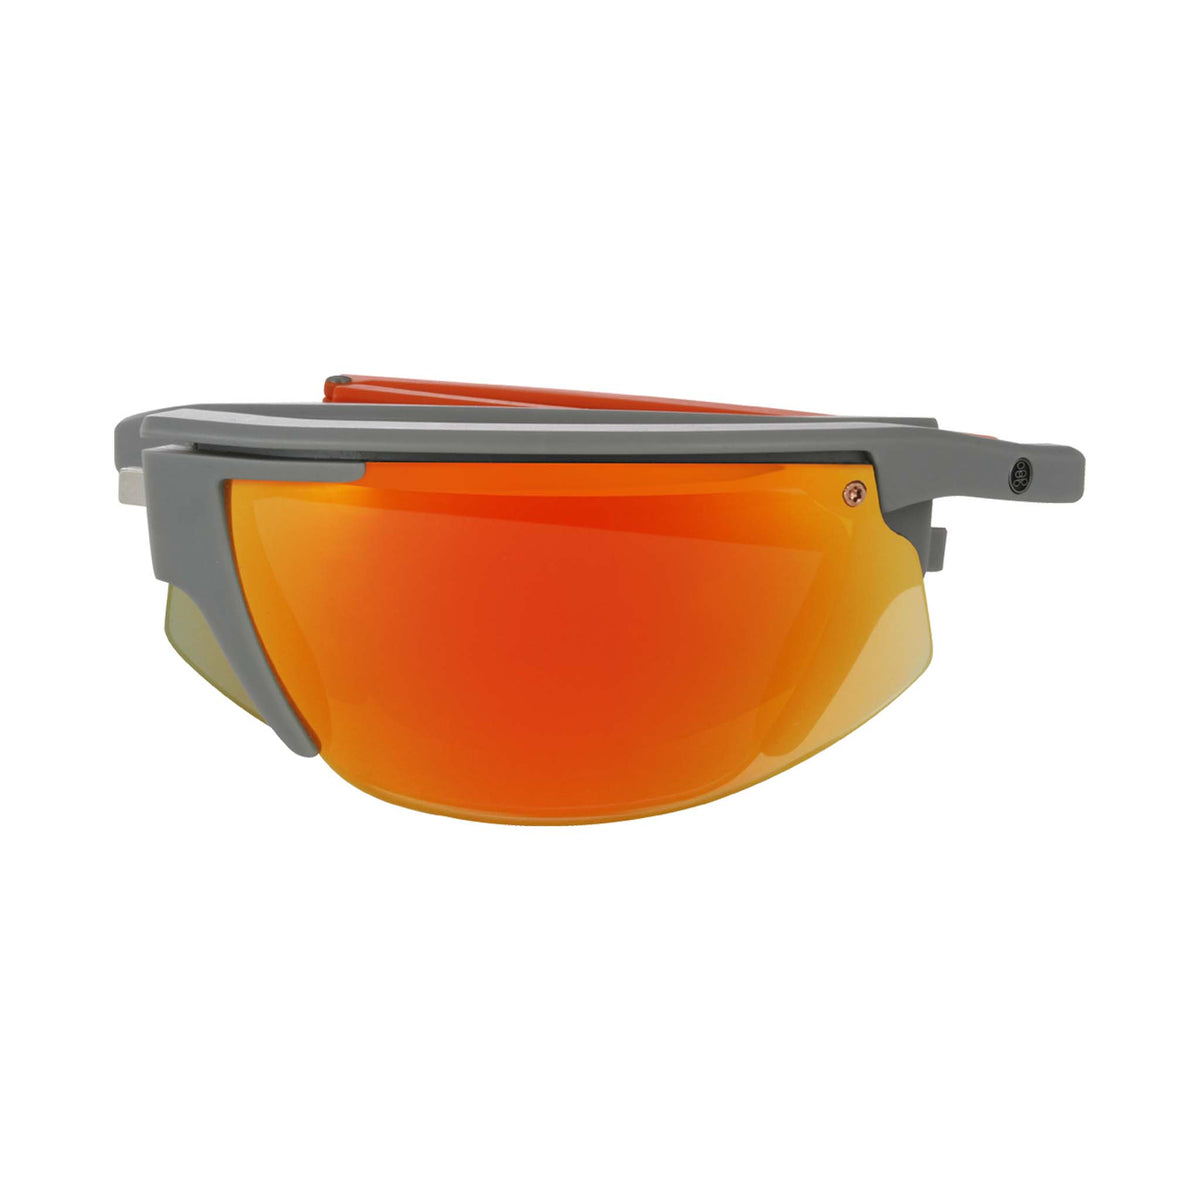 Popticals, Premium Compact Sunglasses, PopStar, 010040-OMGP, Polarized Sunglasses, Matte Gray/Orange Frame, Gray Lenses w/Orange Mirror Finish, Compact View